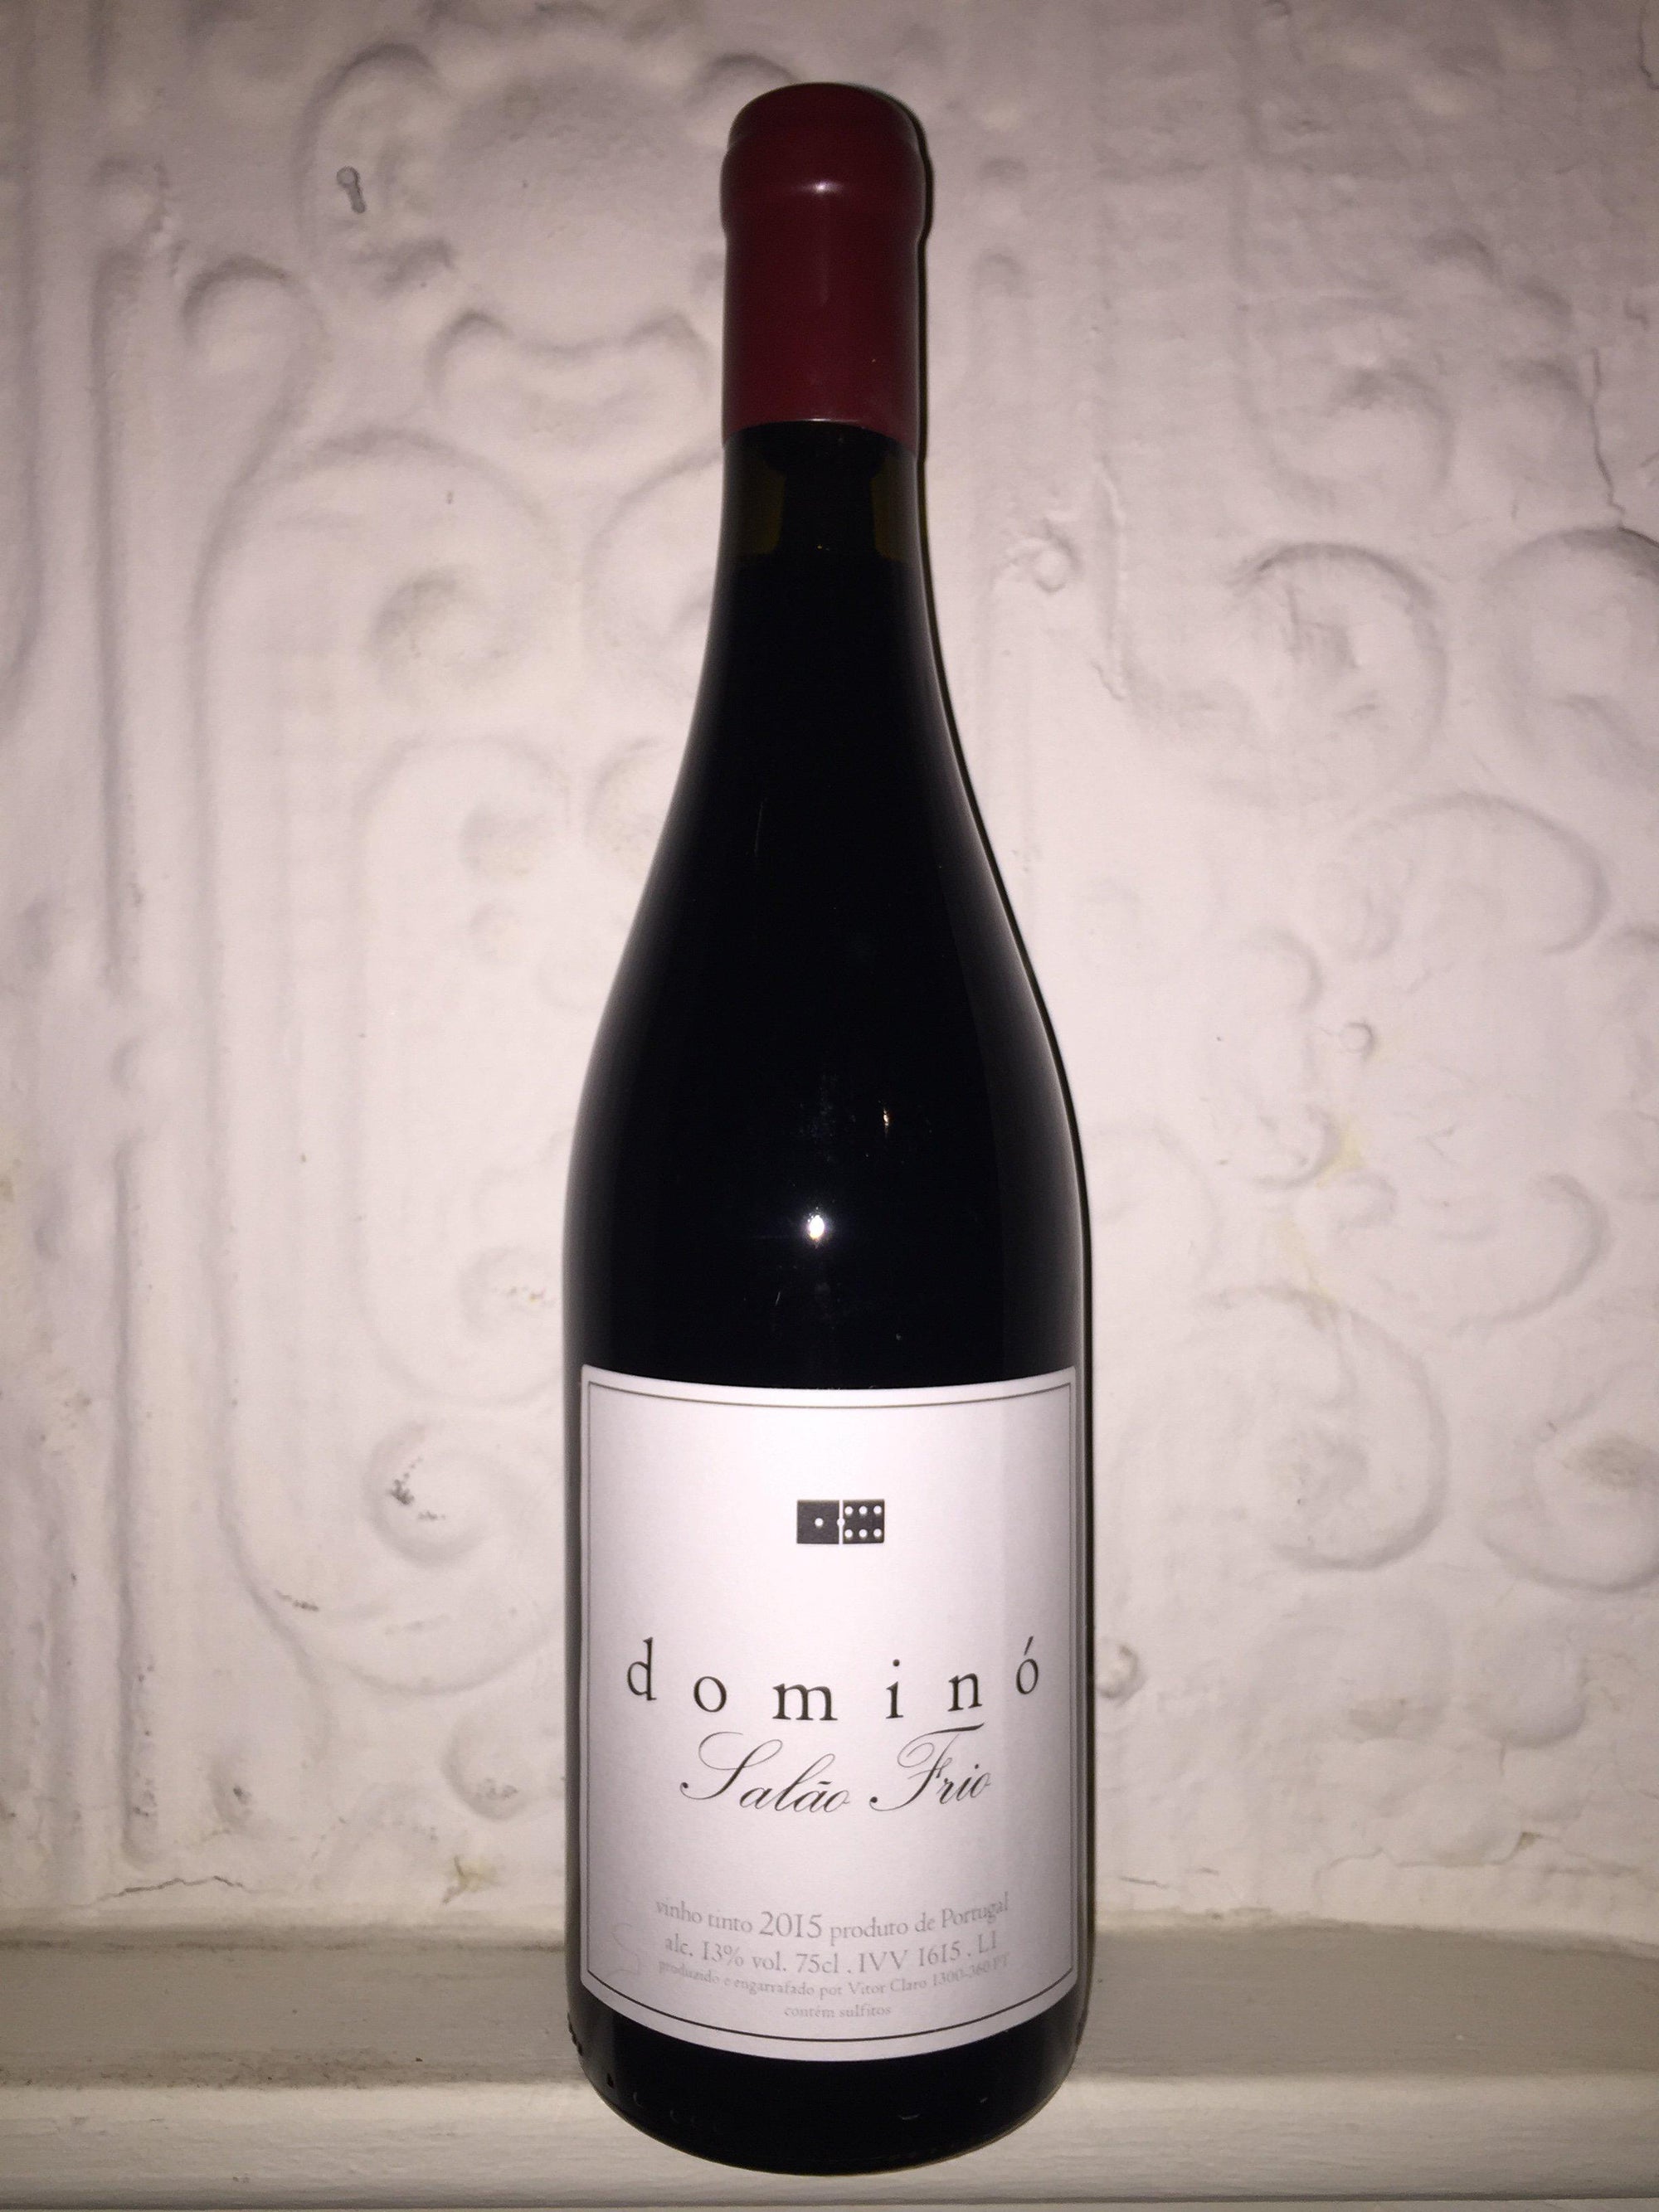 Salao Frio, Vitor Claro 2015 (Alentejo, Portugal)-Wine-Bibber & Bell